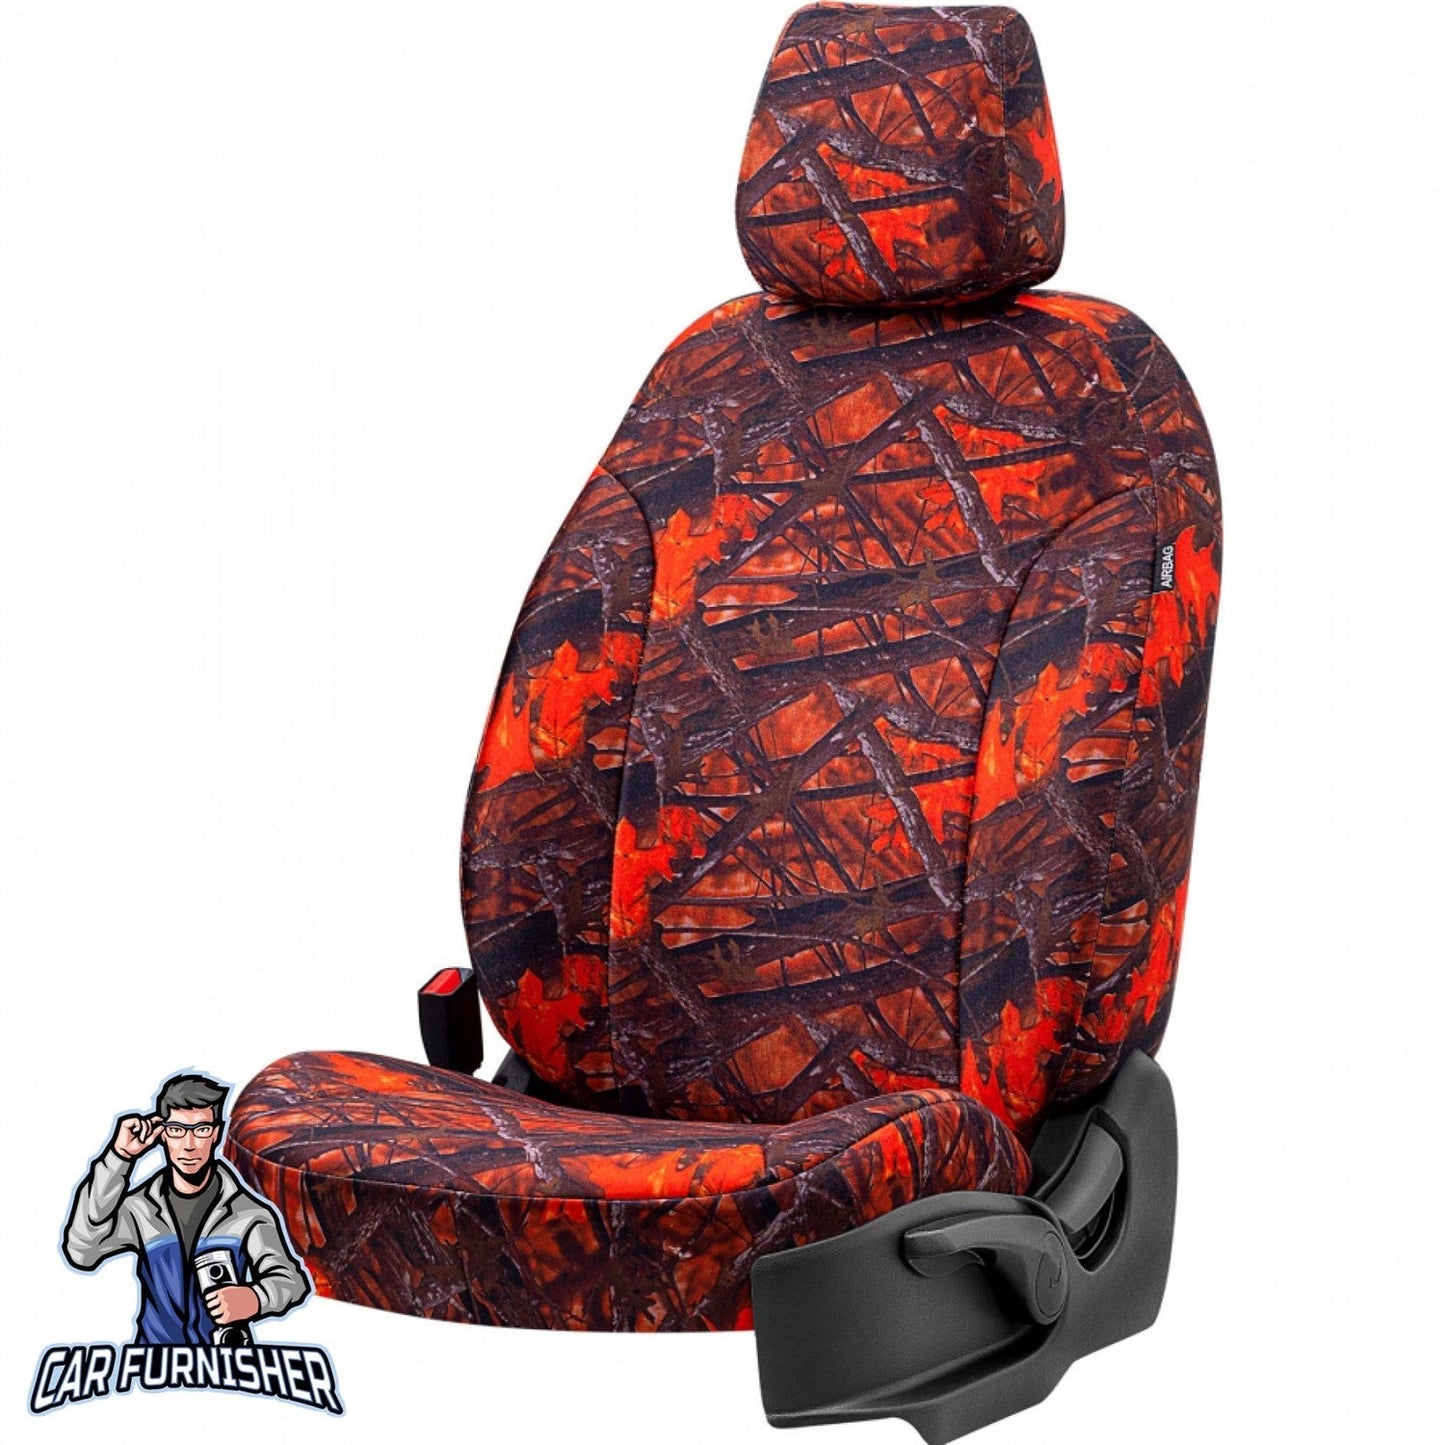 Skoda Superb Seat Covers Camouflage Waterproof Design Sahara Camo Waterproof Fabric